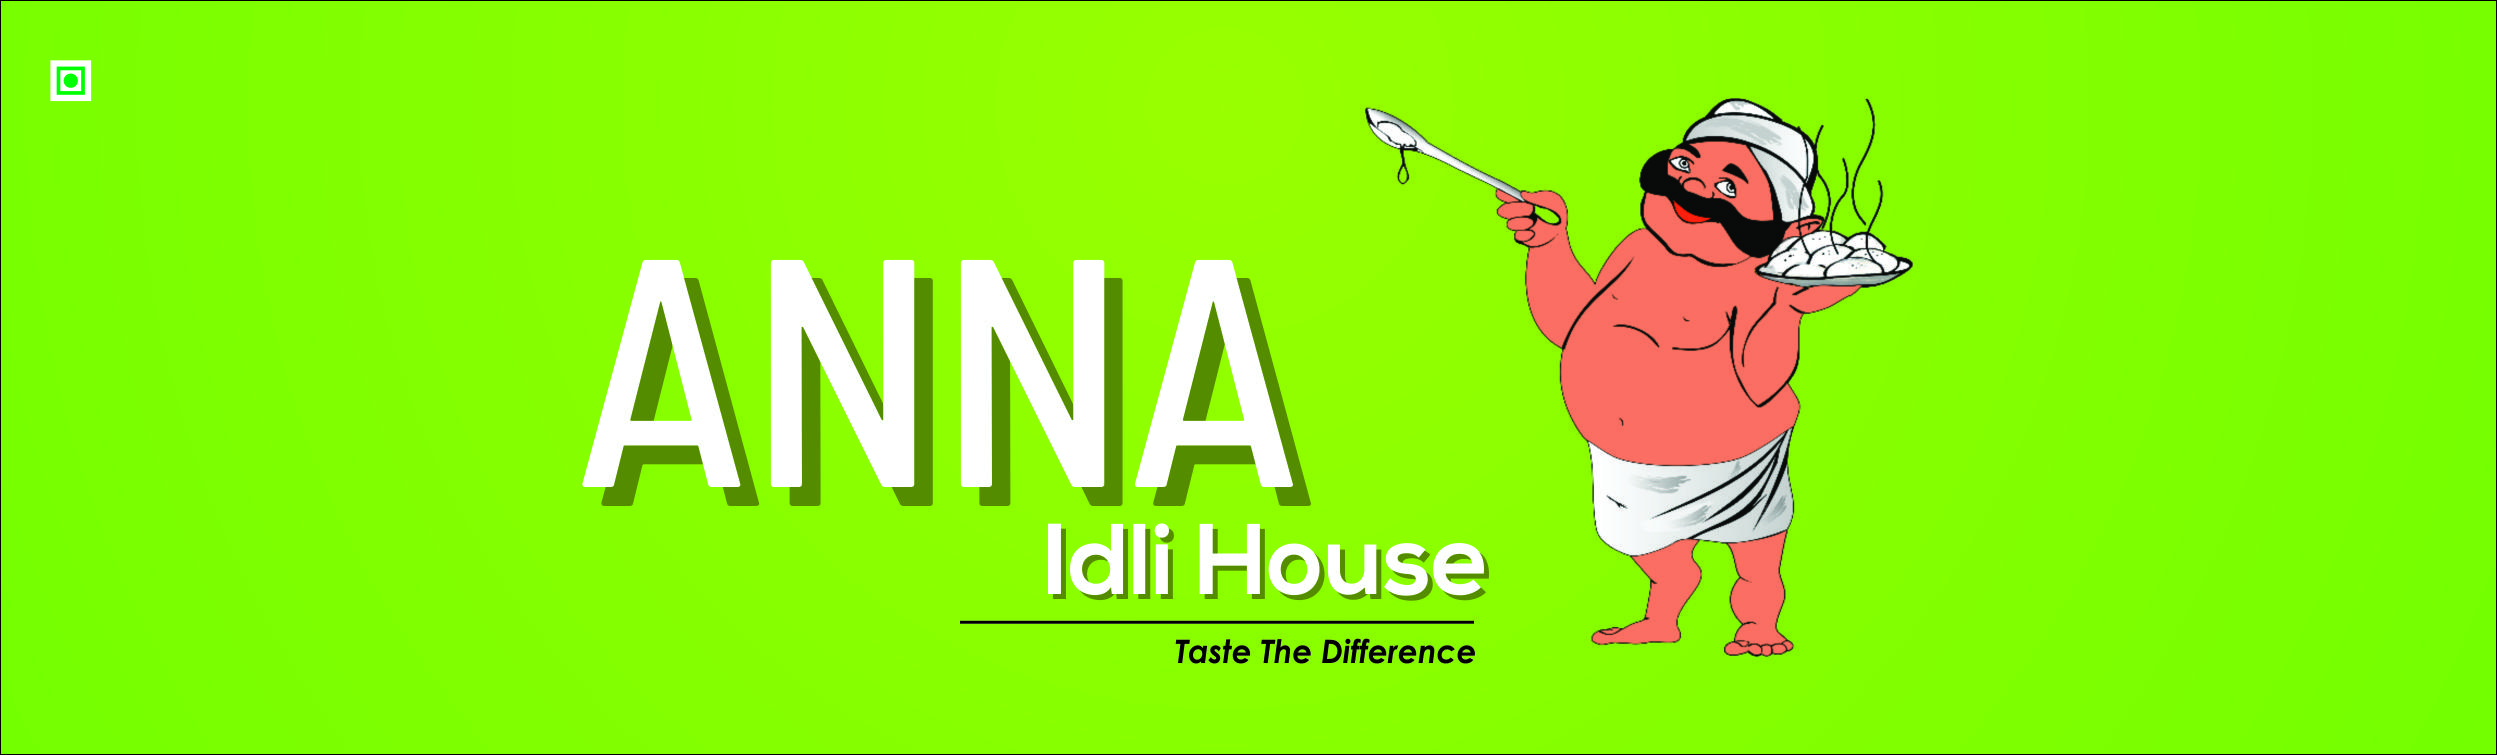 Anna Idli House Logo